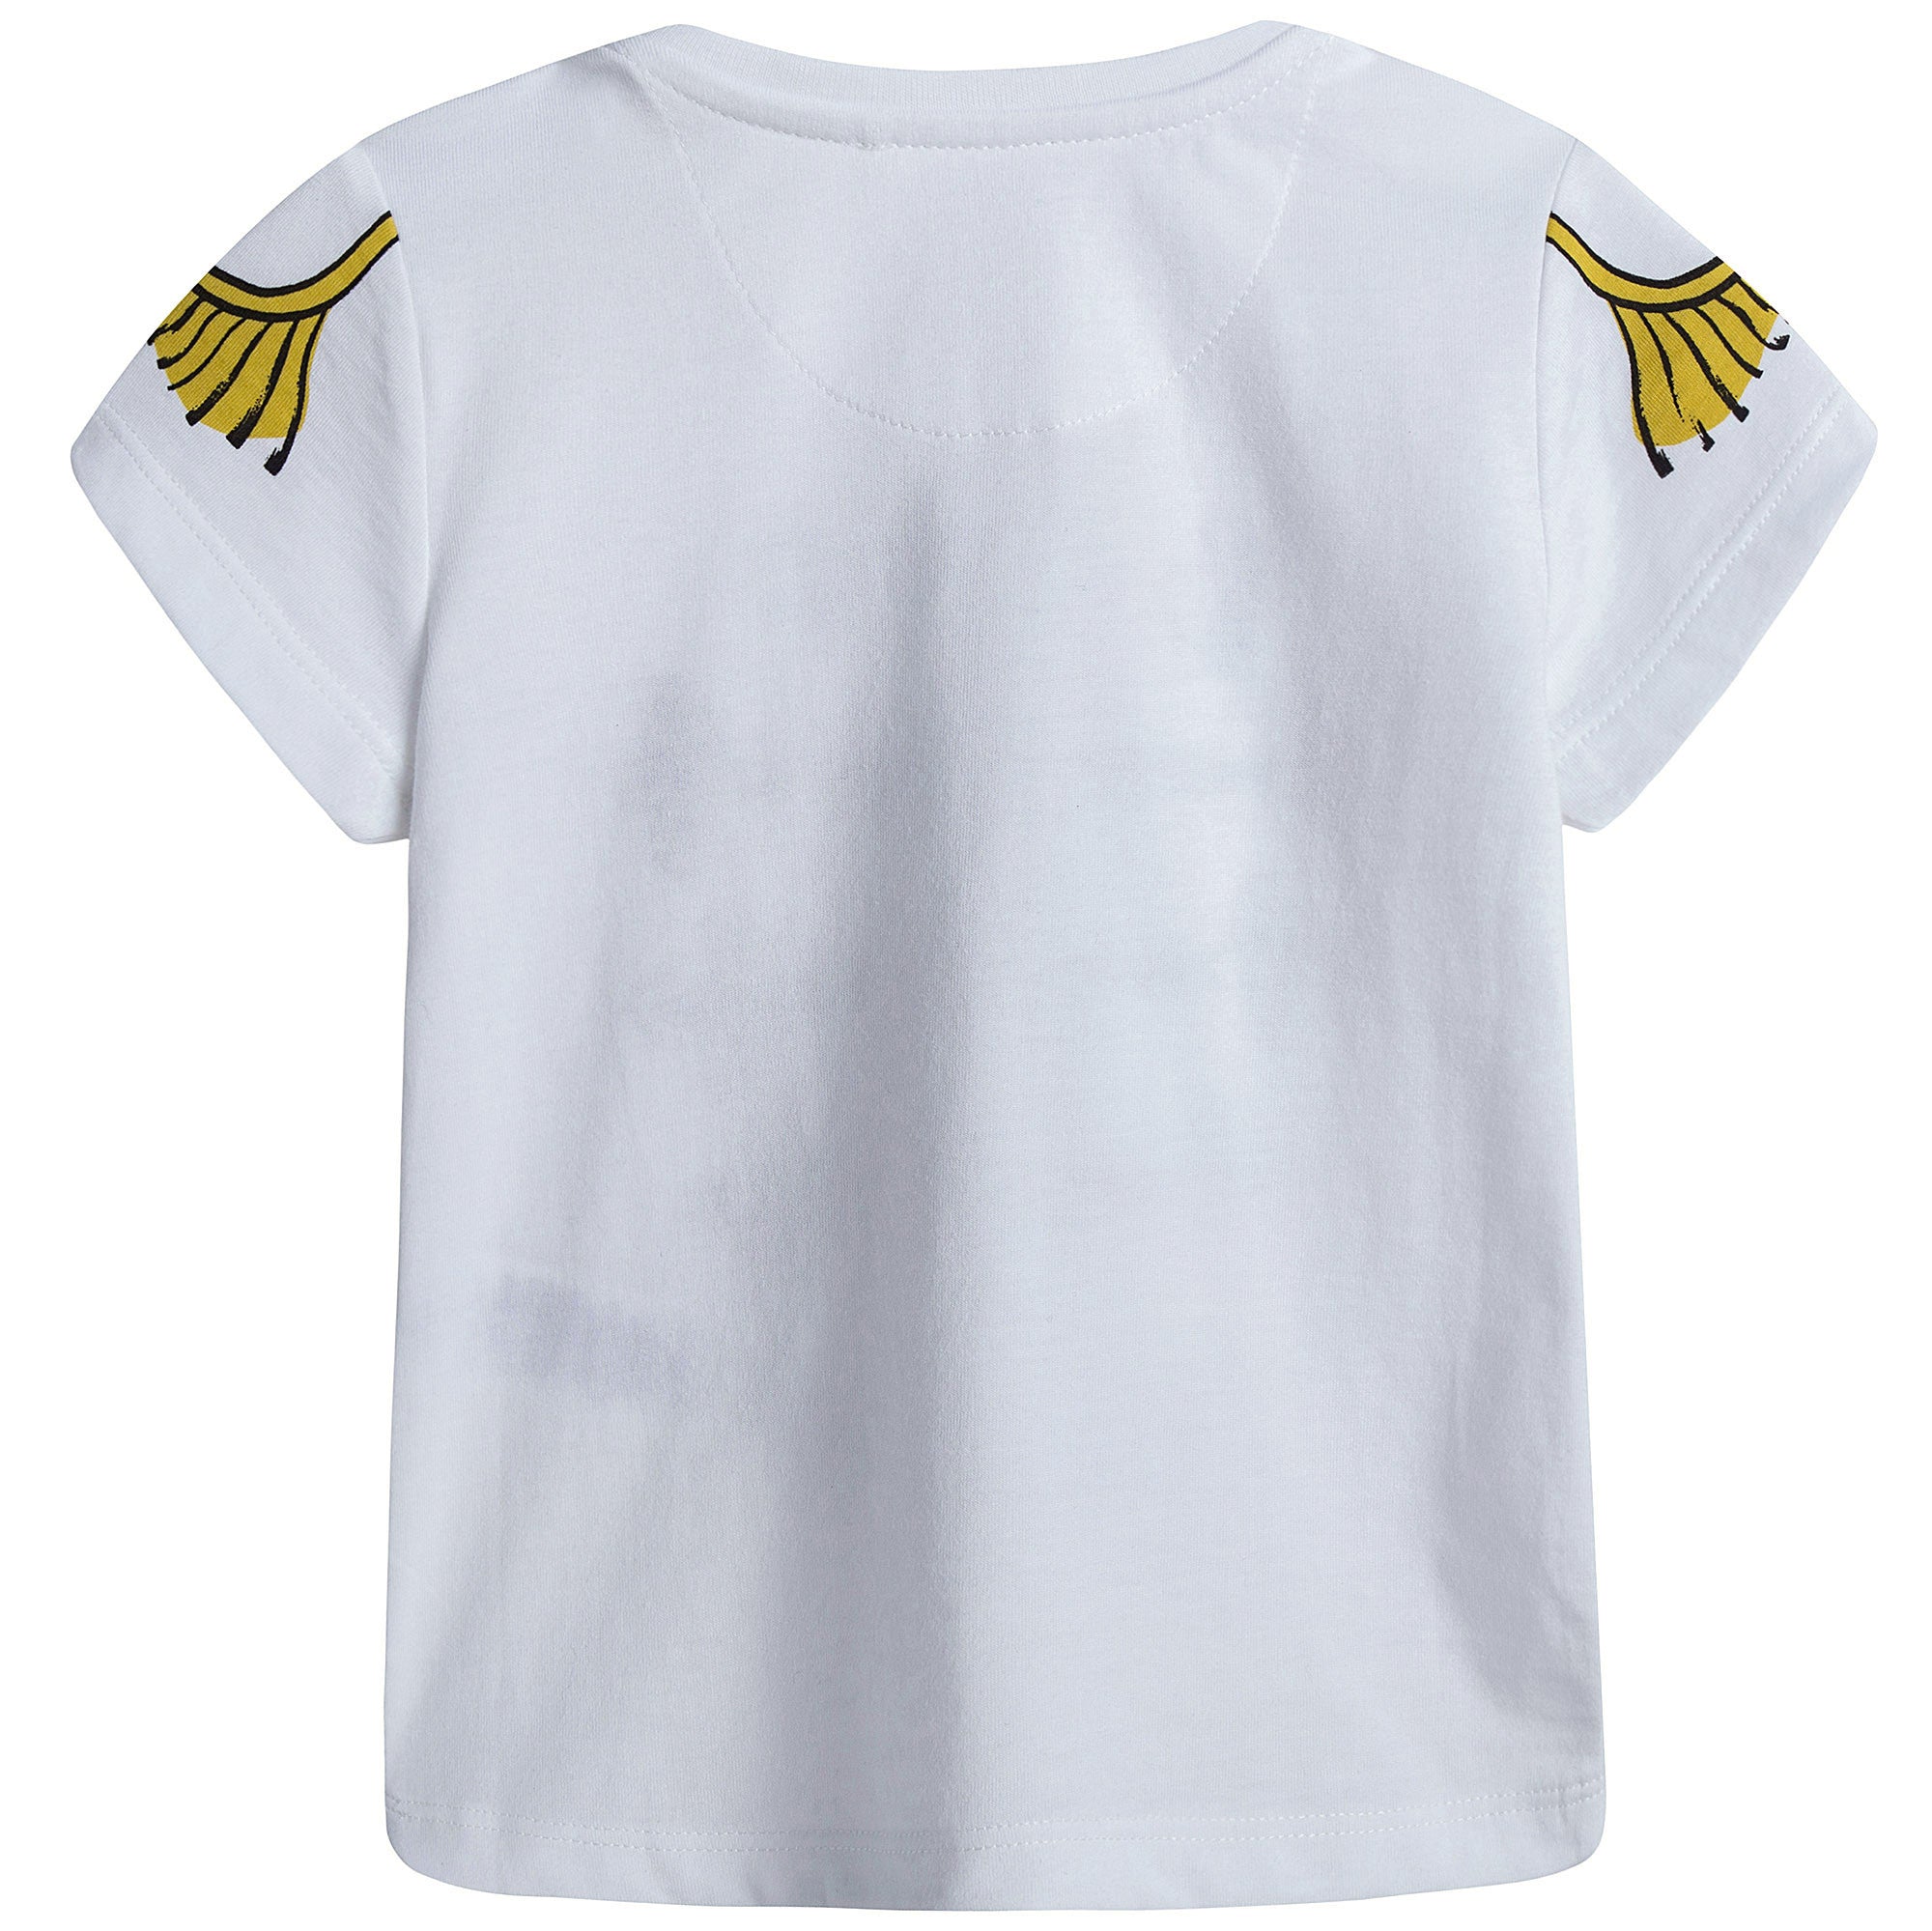 Baby Girls White Band Practice T-Shirt - CÉMAROSE | Children's Fashion Store - 2